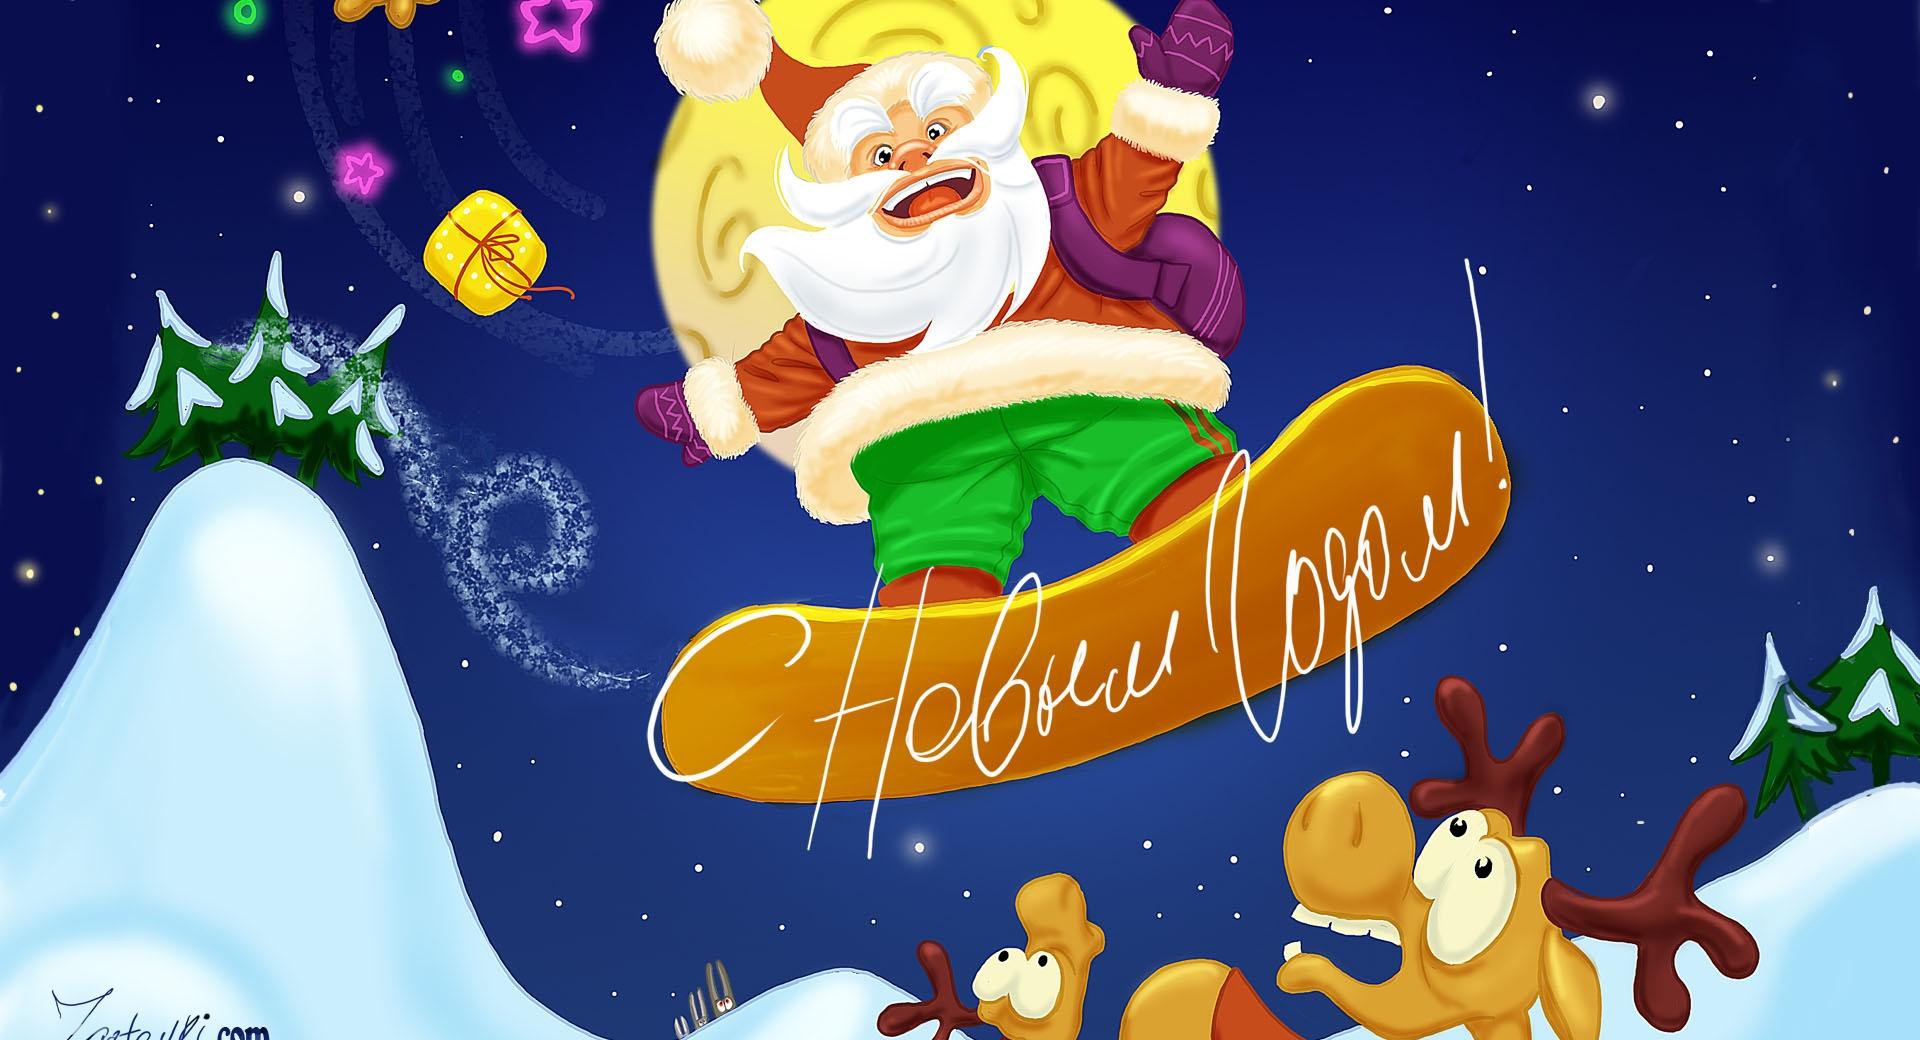 Funny Santa Claus Christmas wallpapers HD quality